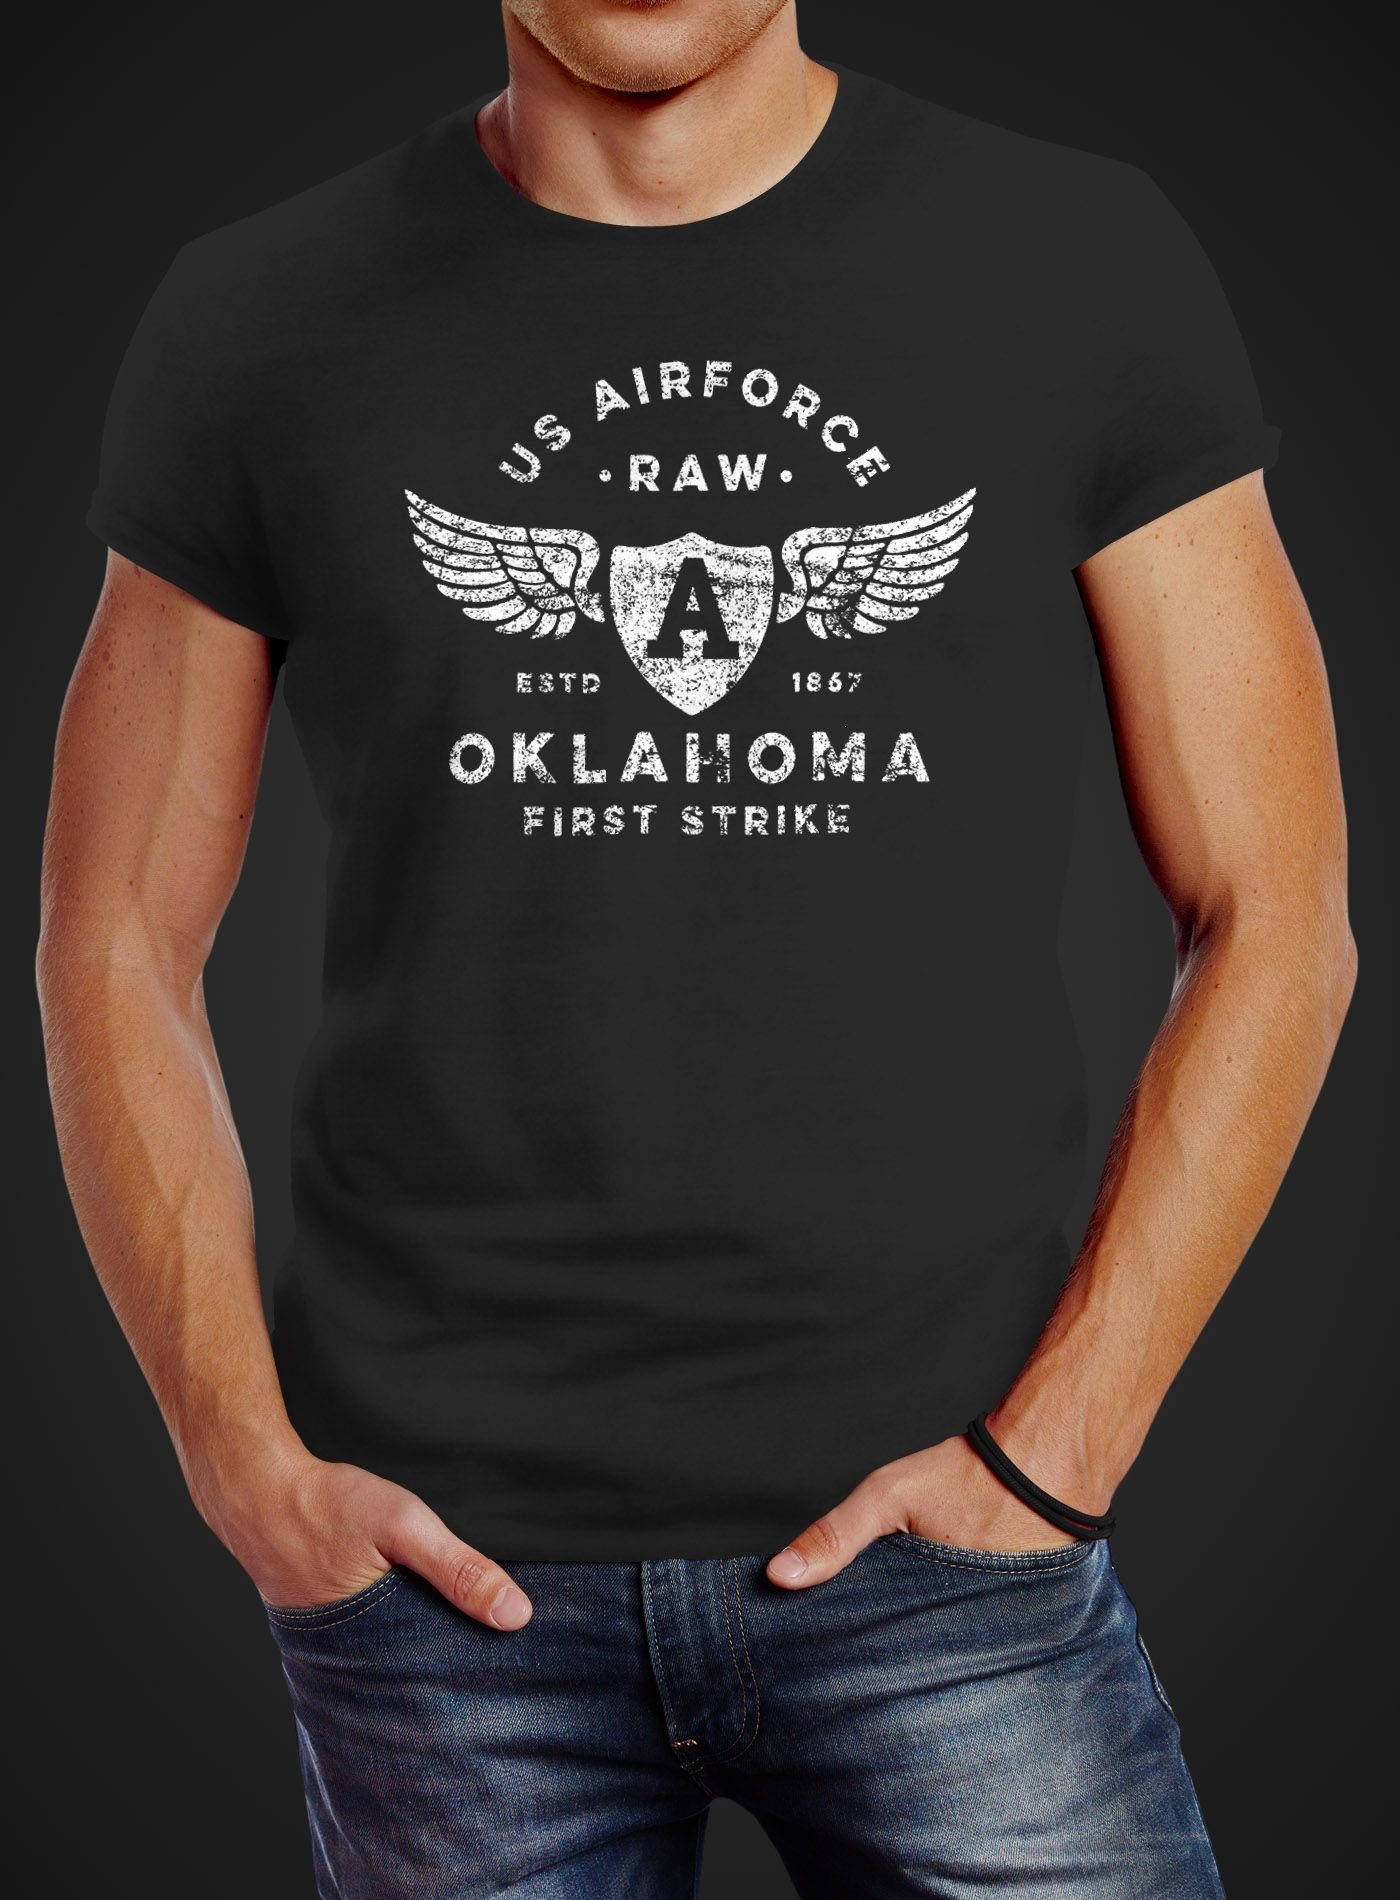 Print Airforce Neverless® Print US Herren T-Shirt mit Oklahoma Aviator schwarz Neverless Print-Shirt Vintage-Shirt